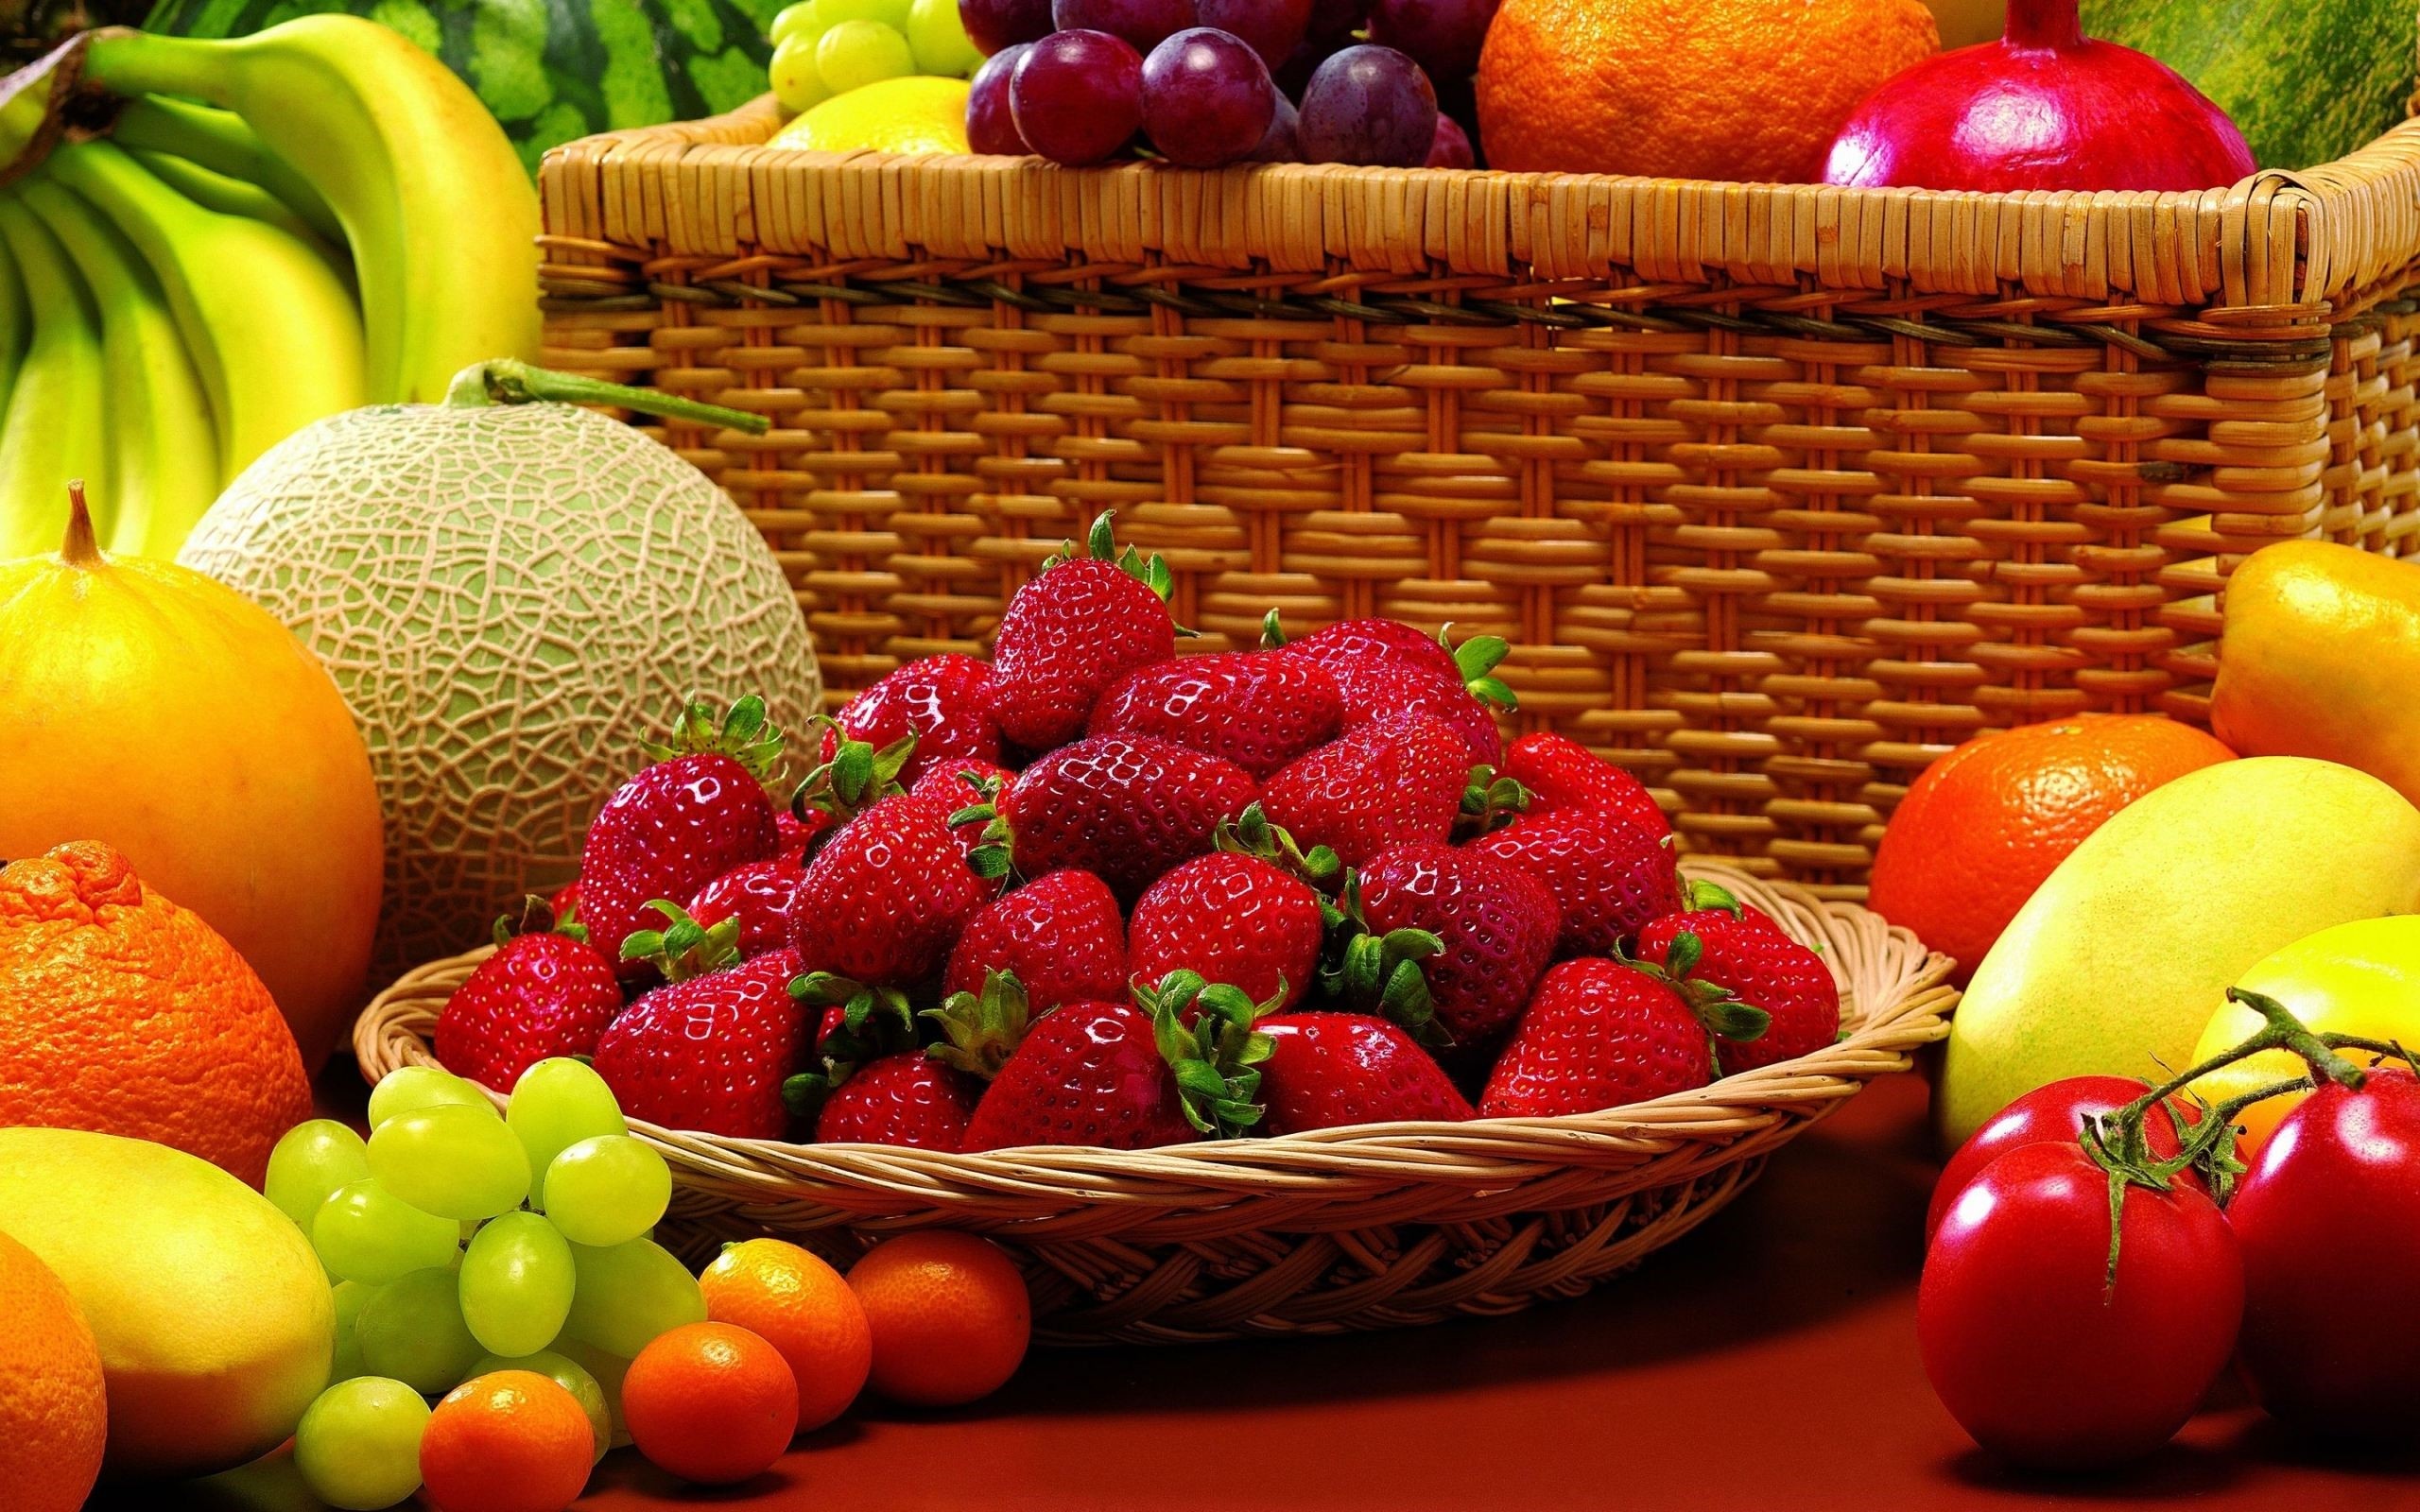 664241 Fruits Wallpaper Images Stock Photos  Vectors  Shutterstock